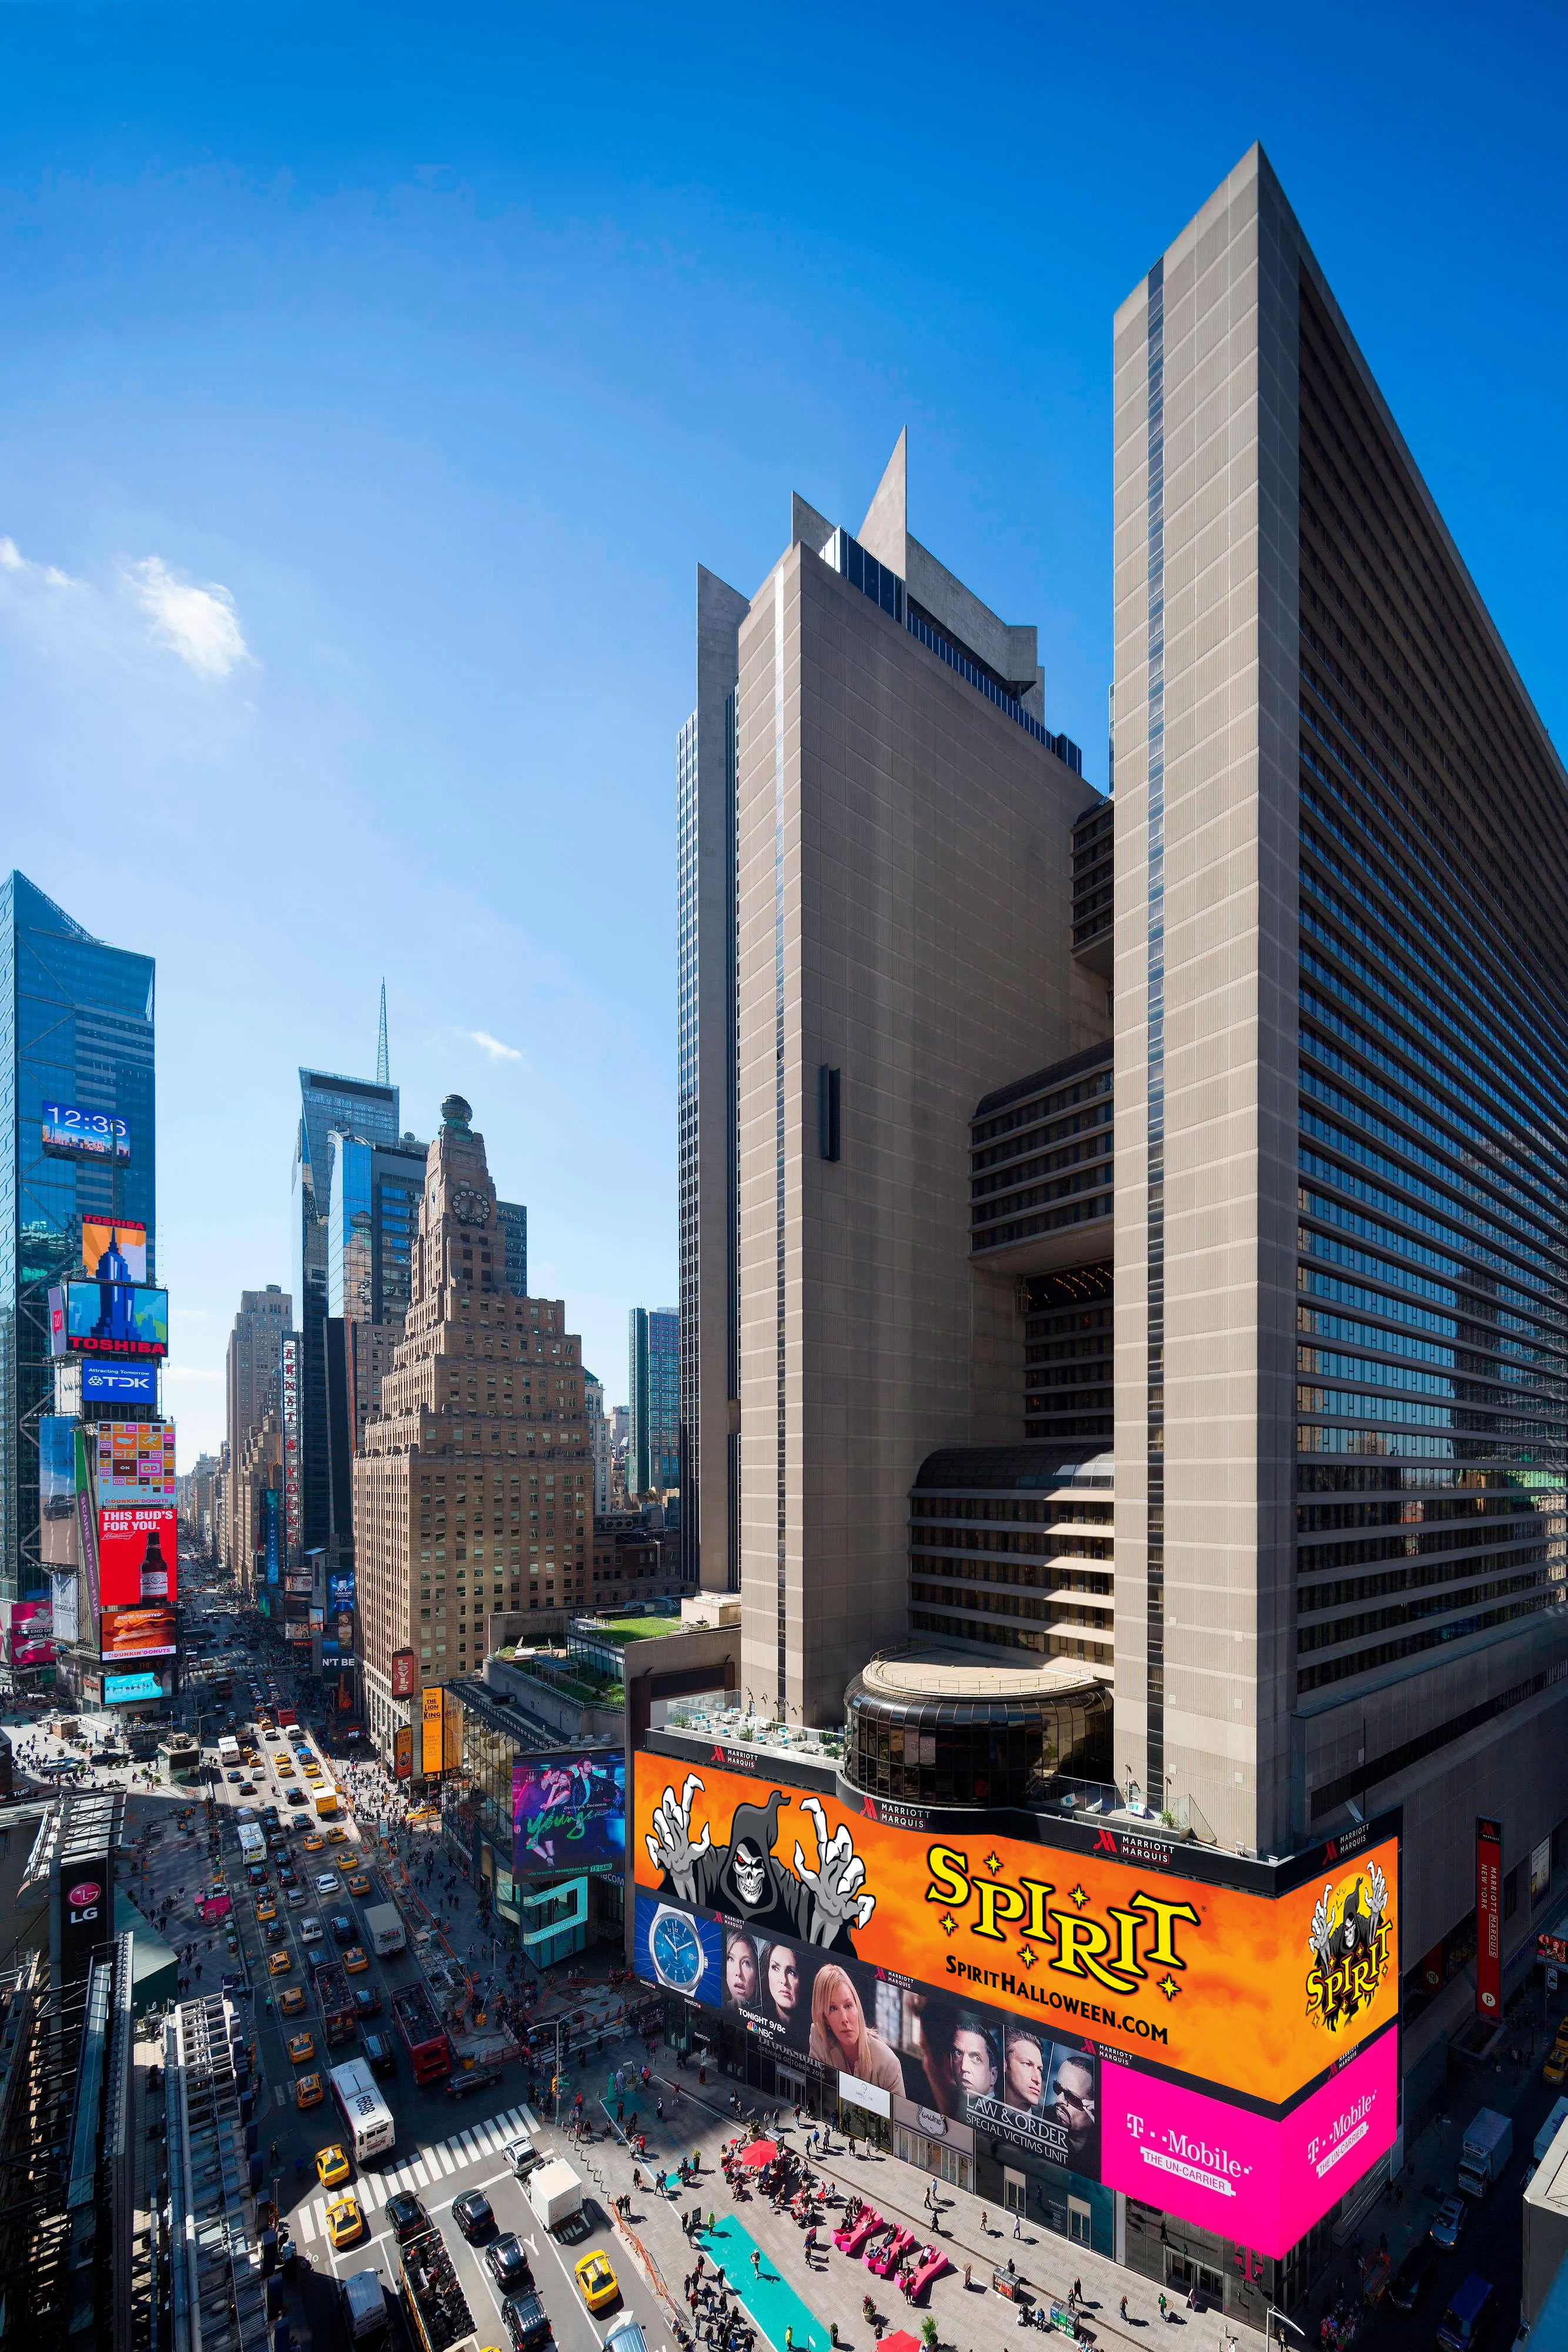 SKE Records Billboard in Times Square NYC – SpitFireHipHop